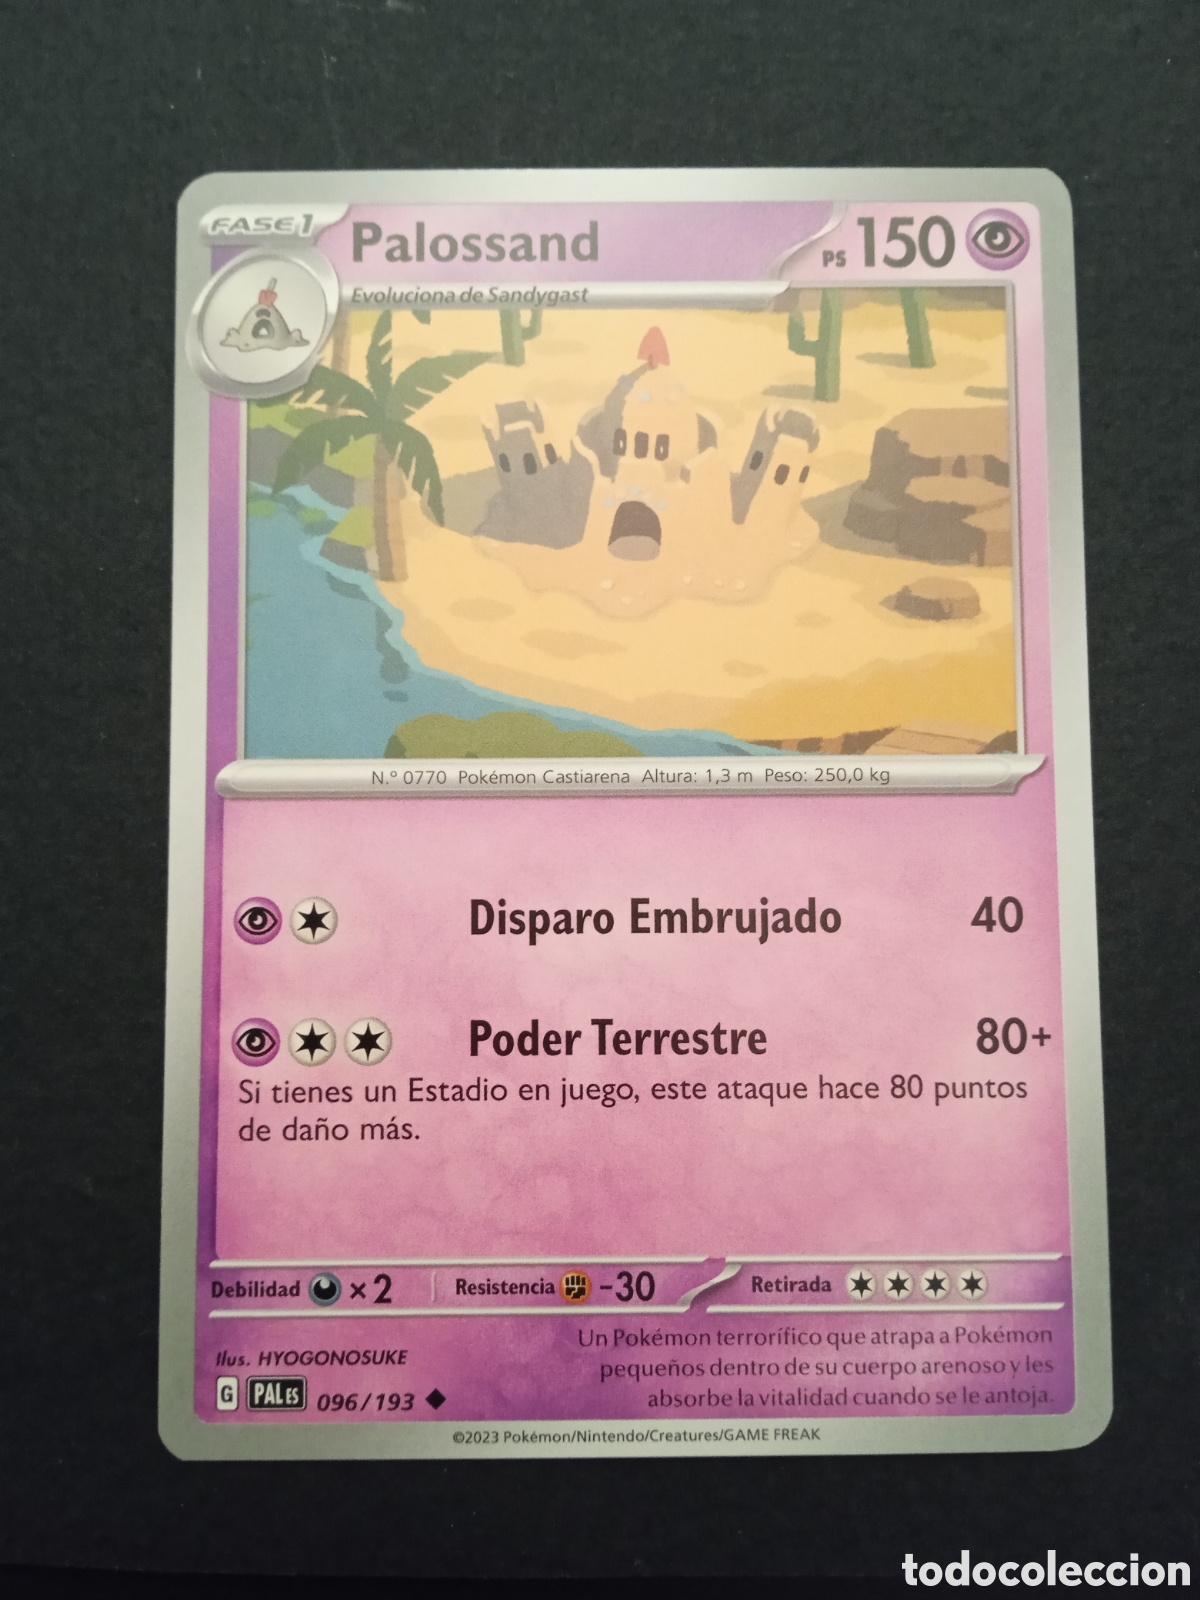 Palossand, Pokémon Escarlata y Pokémon Púrpura